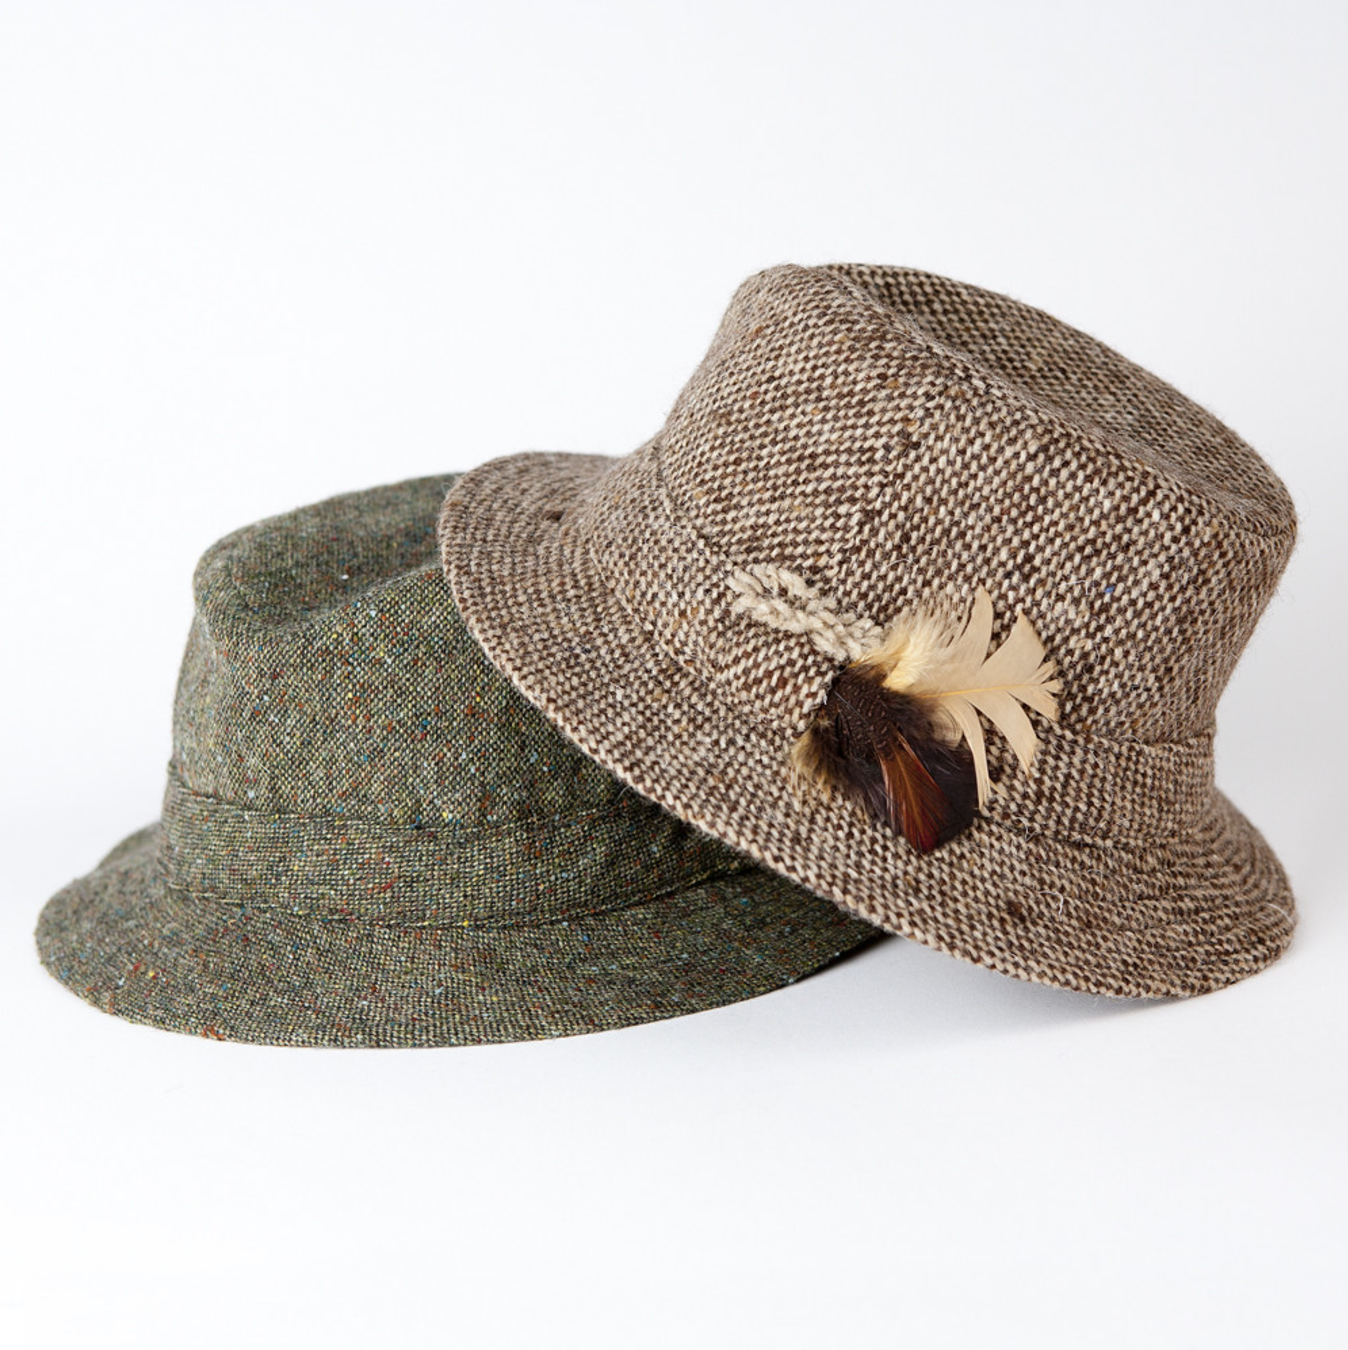 The Irish Patchwork Walking Hat